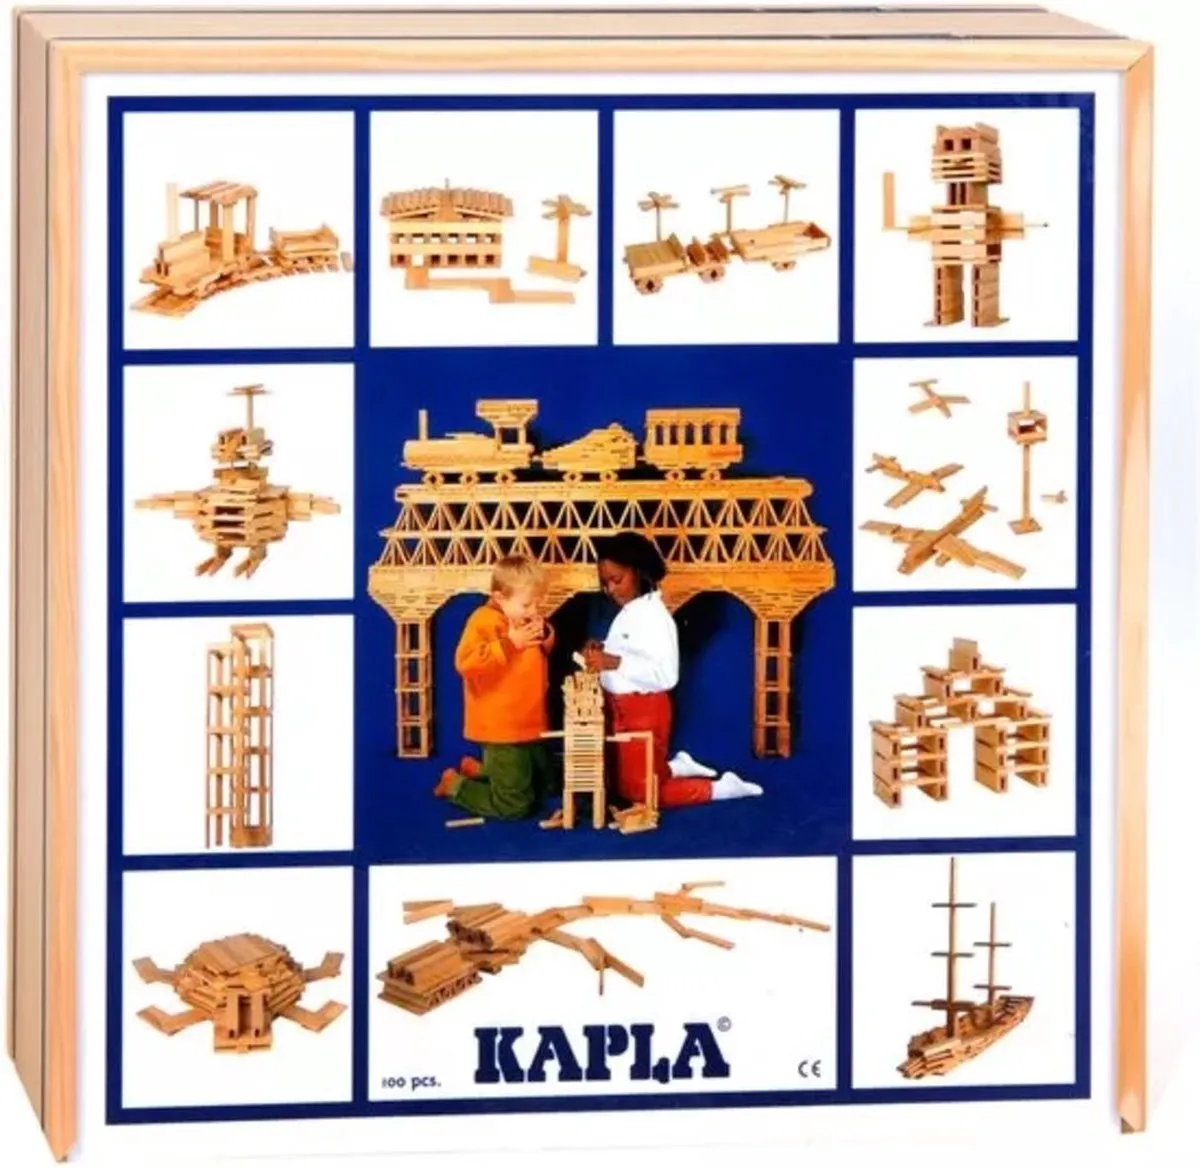 Kapla - Bouwblokjes - 100 stuks speelgoed